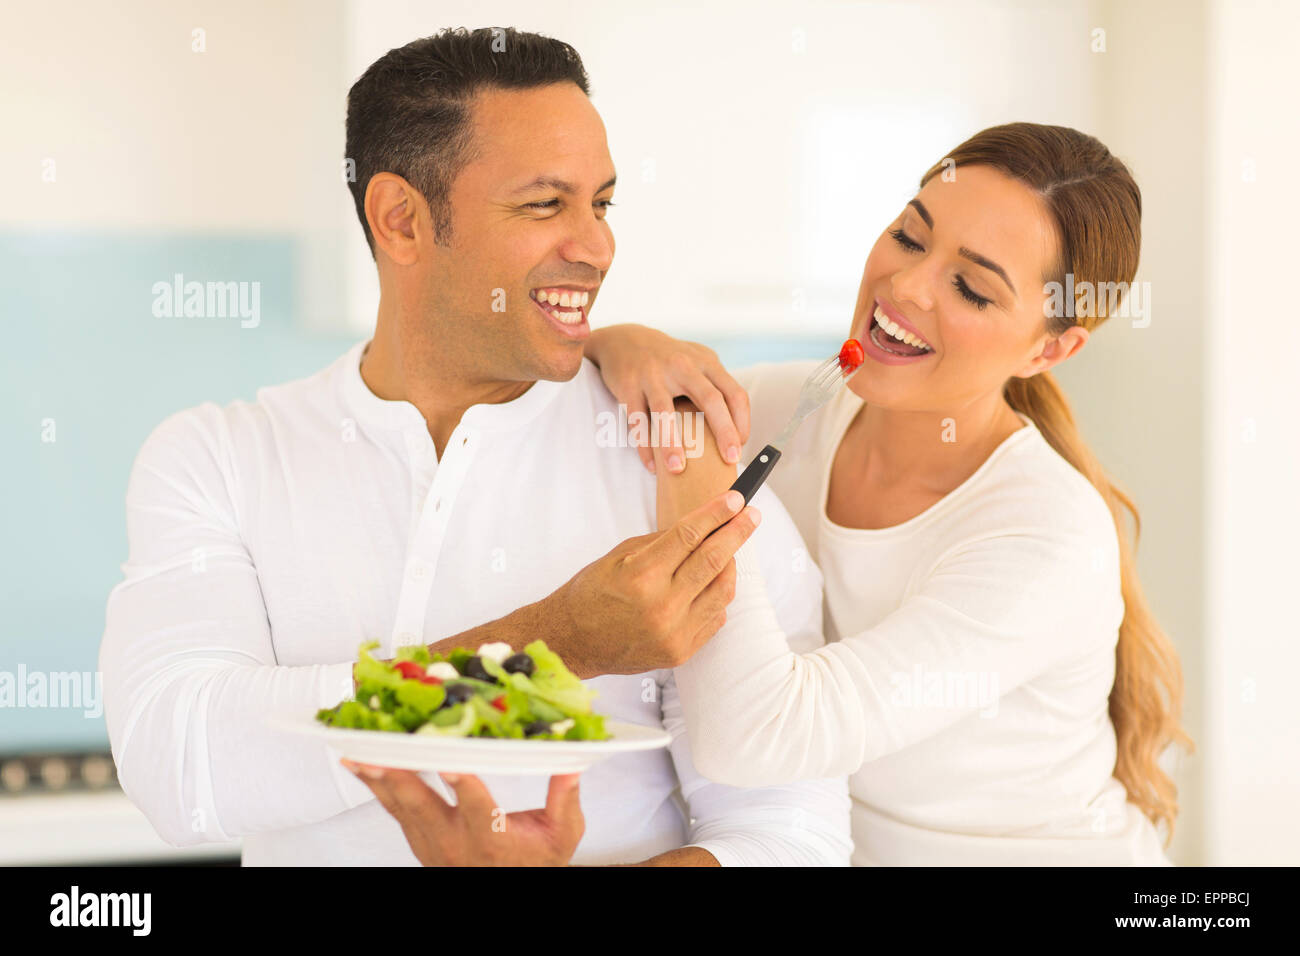 loving husband feeding wife salad at home Stock Photo